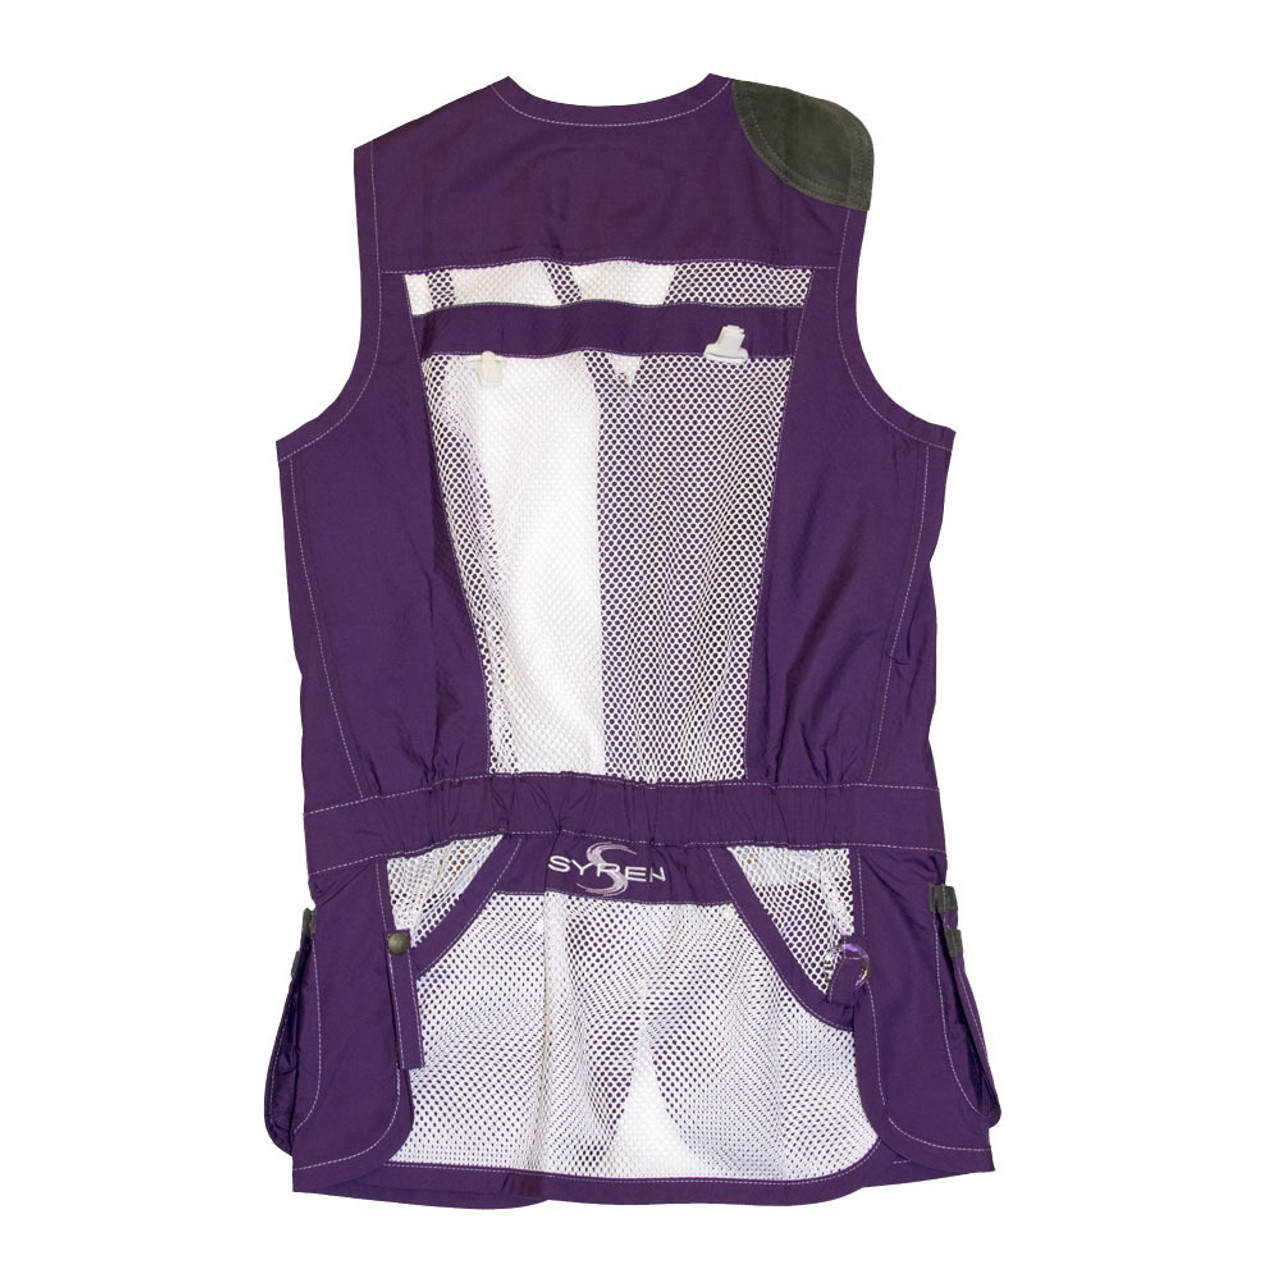 Syren Women’s Shooting Vest- Purple- Back